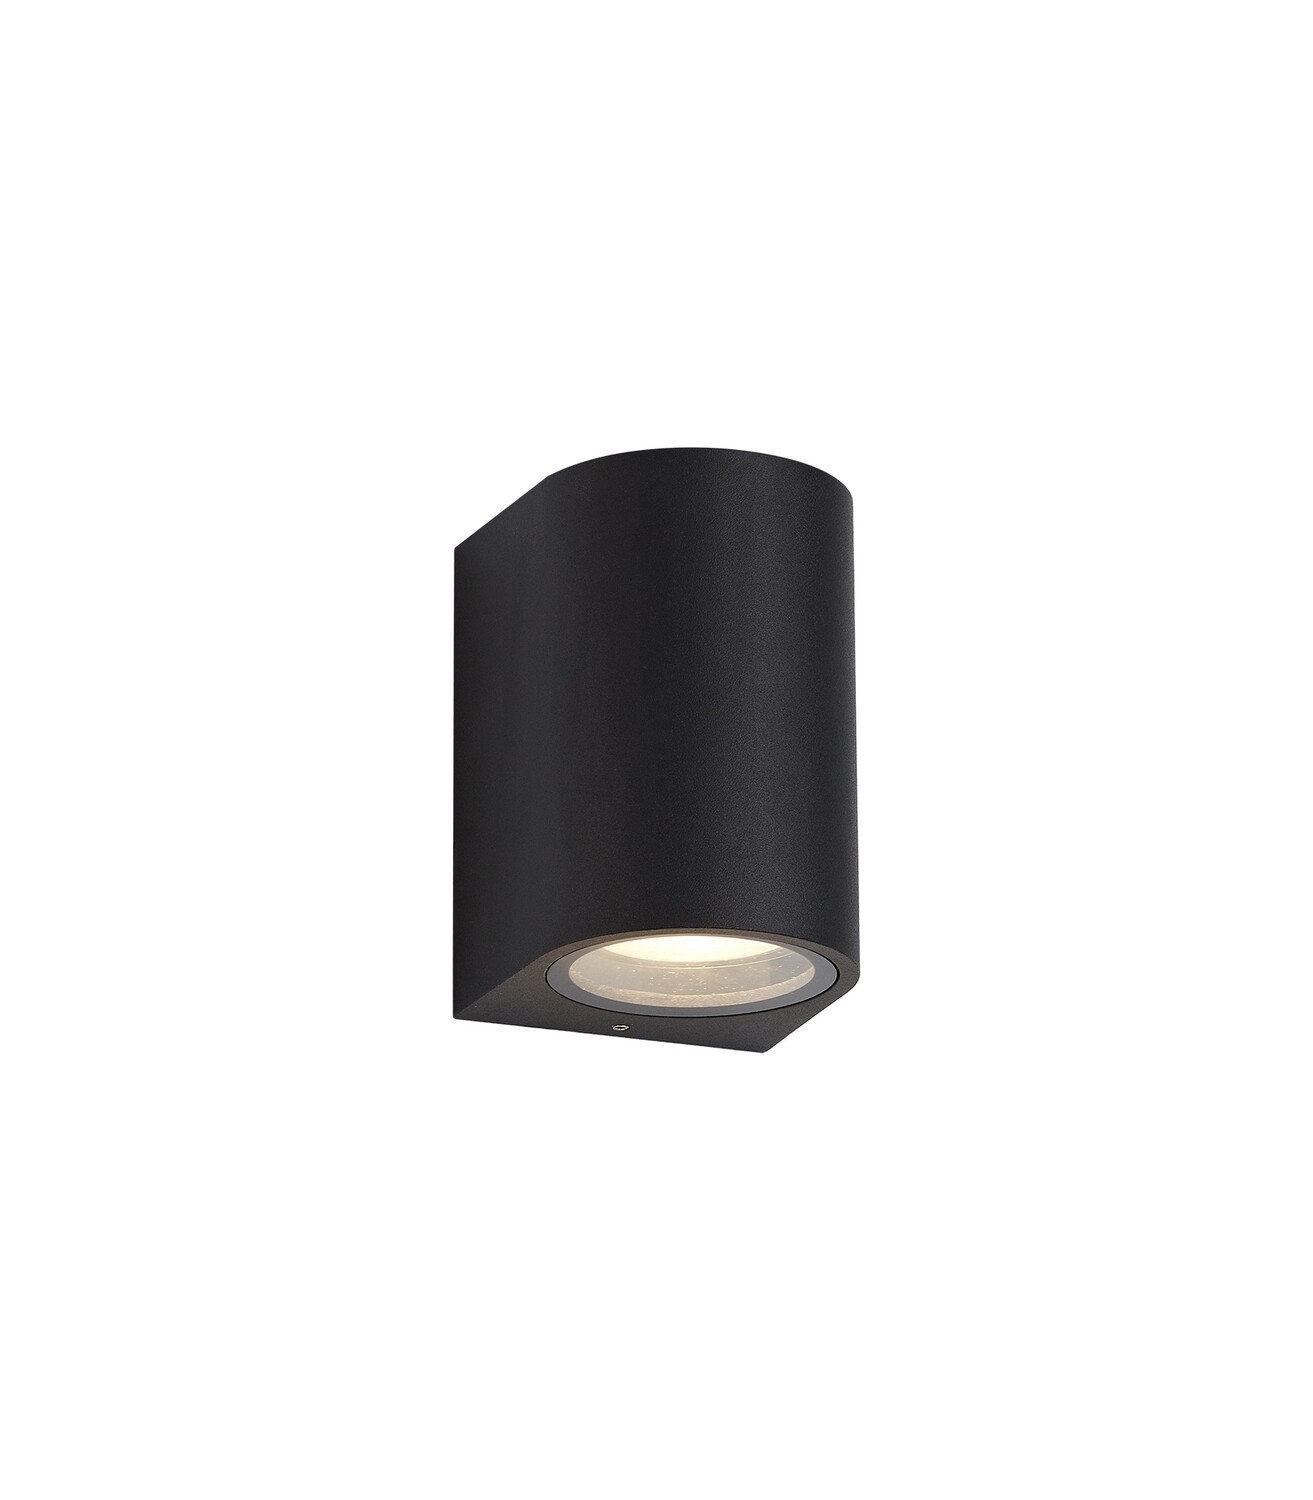 OMAR Curved Wall Lamp, 1 x GU10, IP54, Sand Black